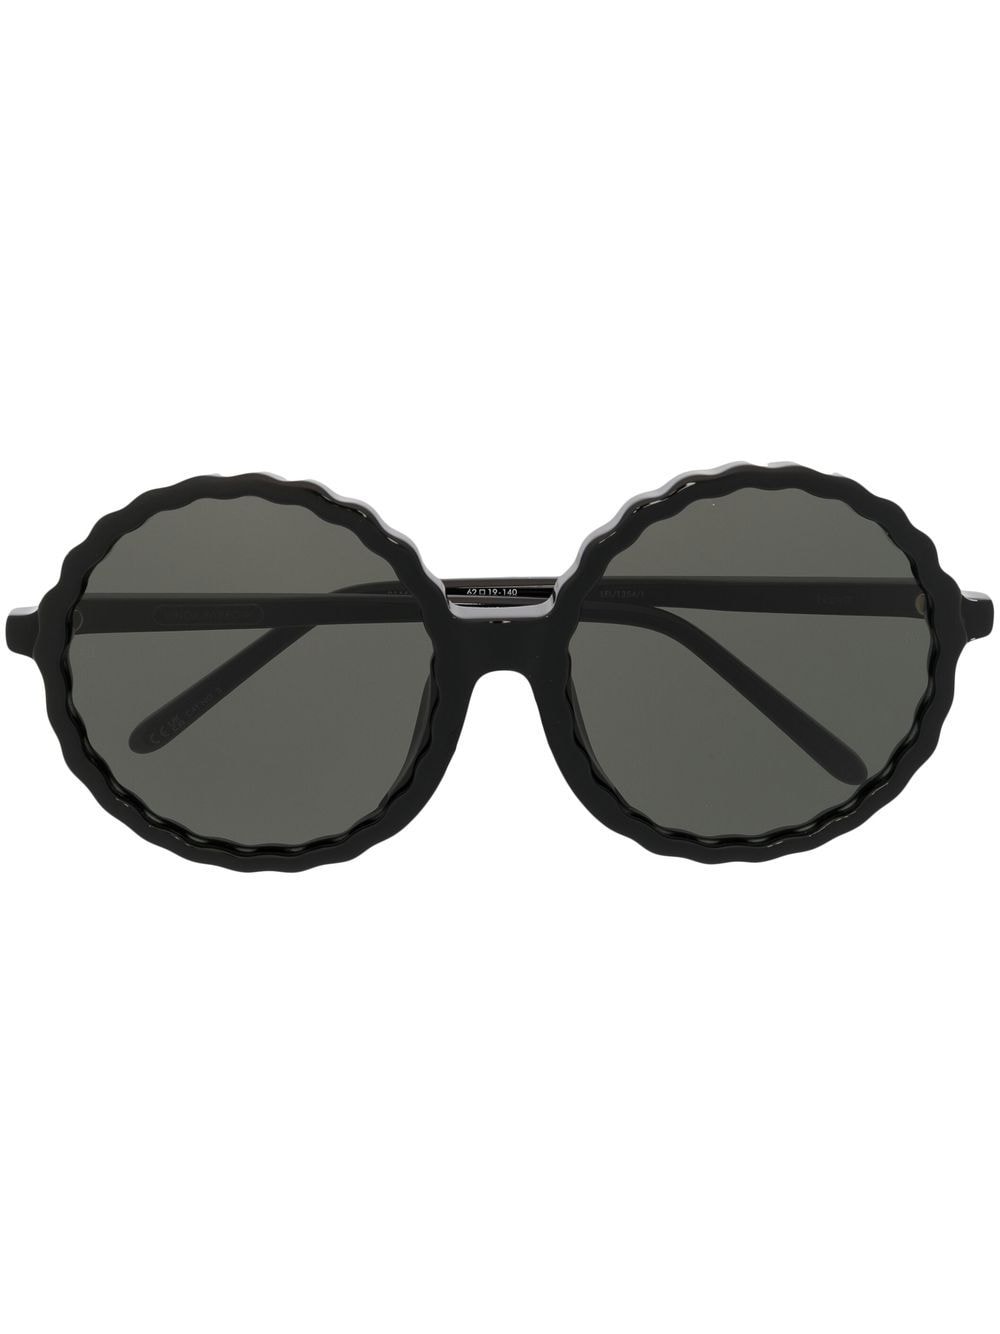 Linda Farrow Nova Lfl 1354 Sunglasses In Black